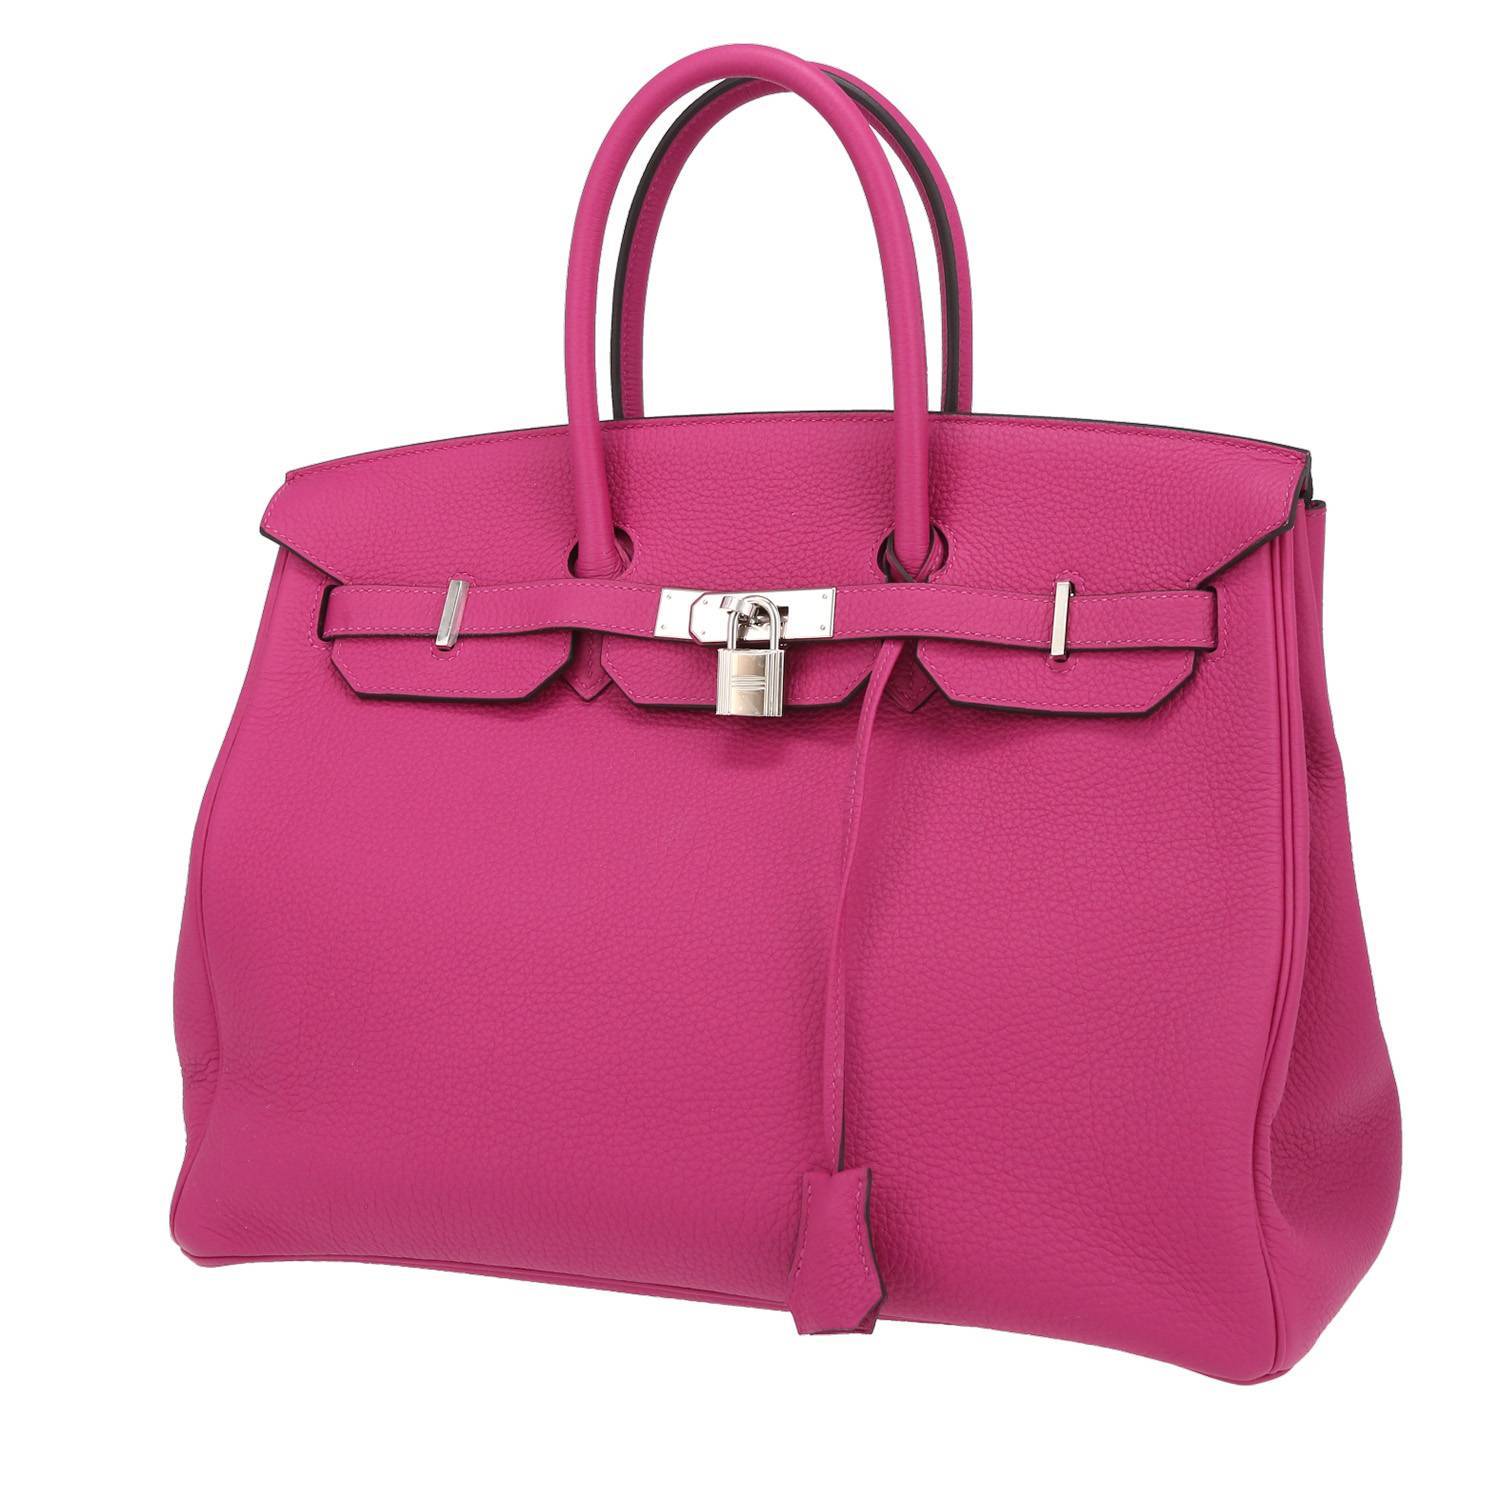 Hermès  Birkin 35 cm handbag  in pink Tosca togo leather - 00pp